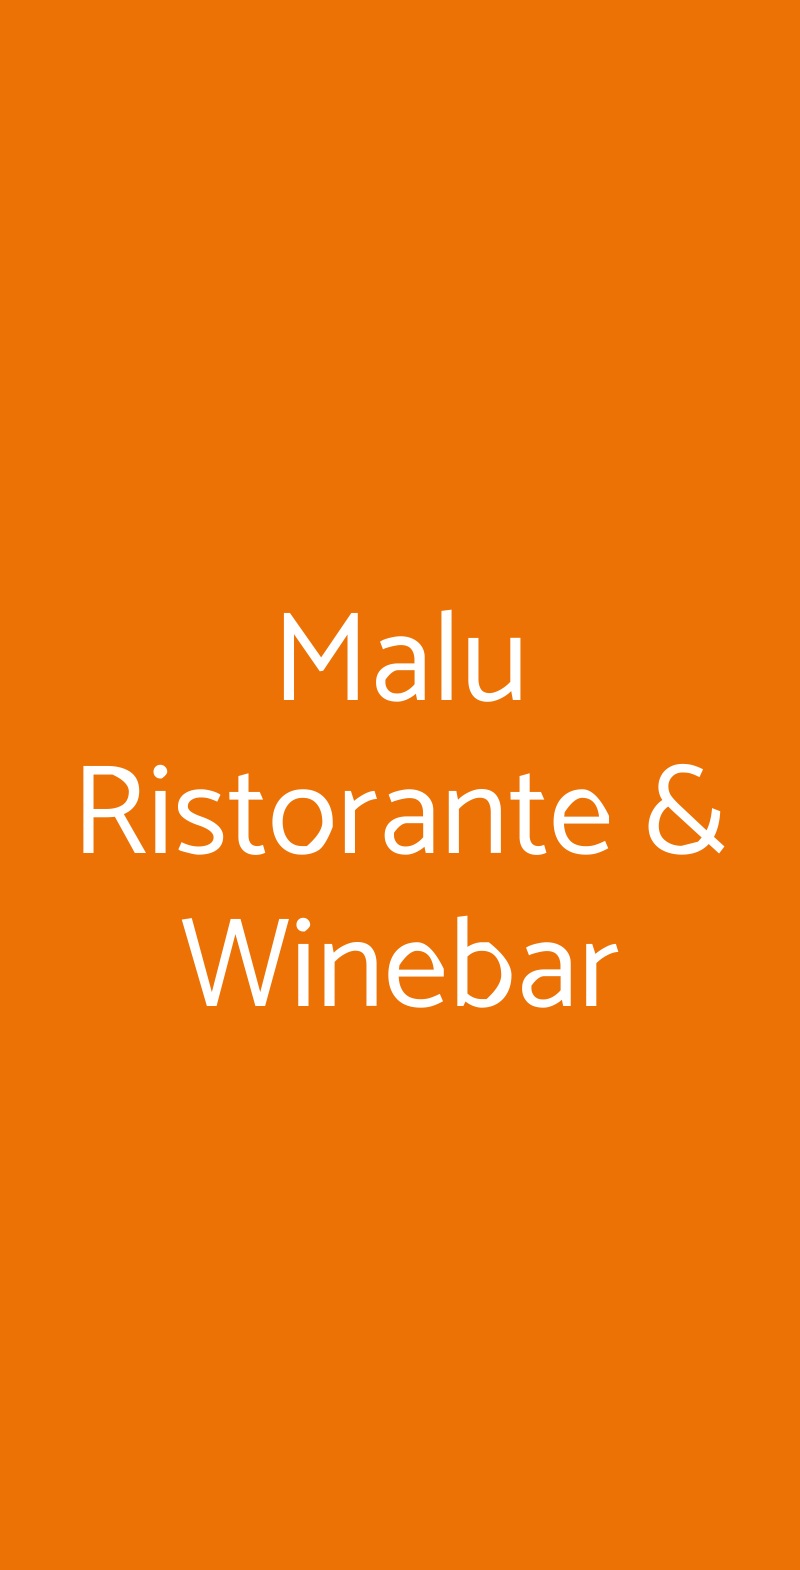 Malu Ristorante & Winebar Milano menù 1 pagina